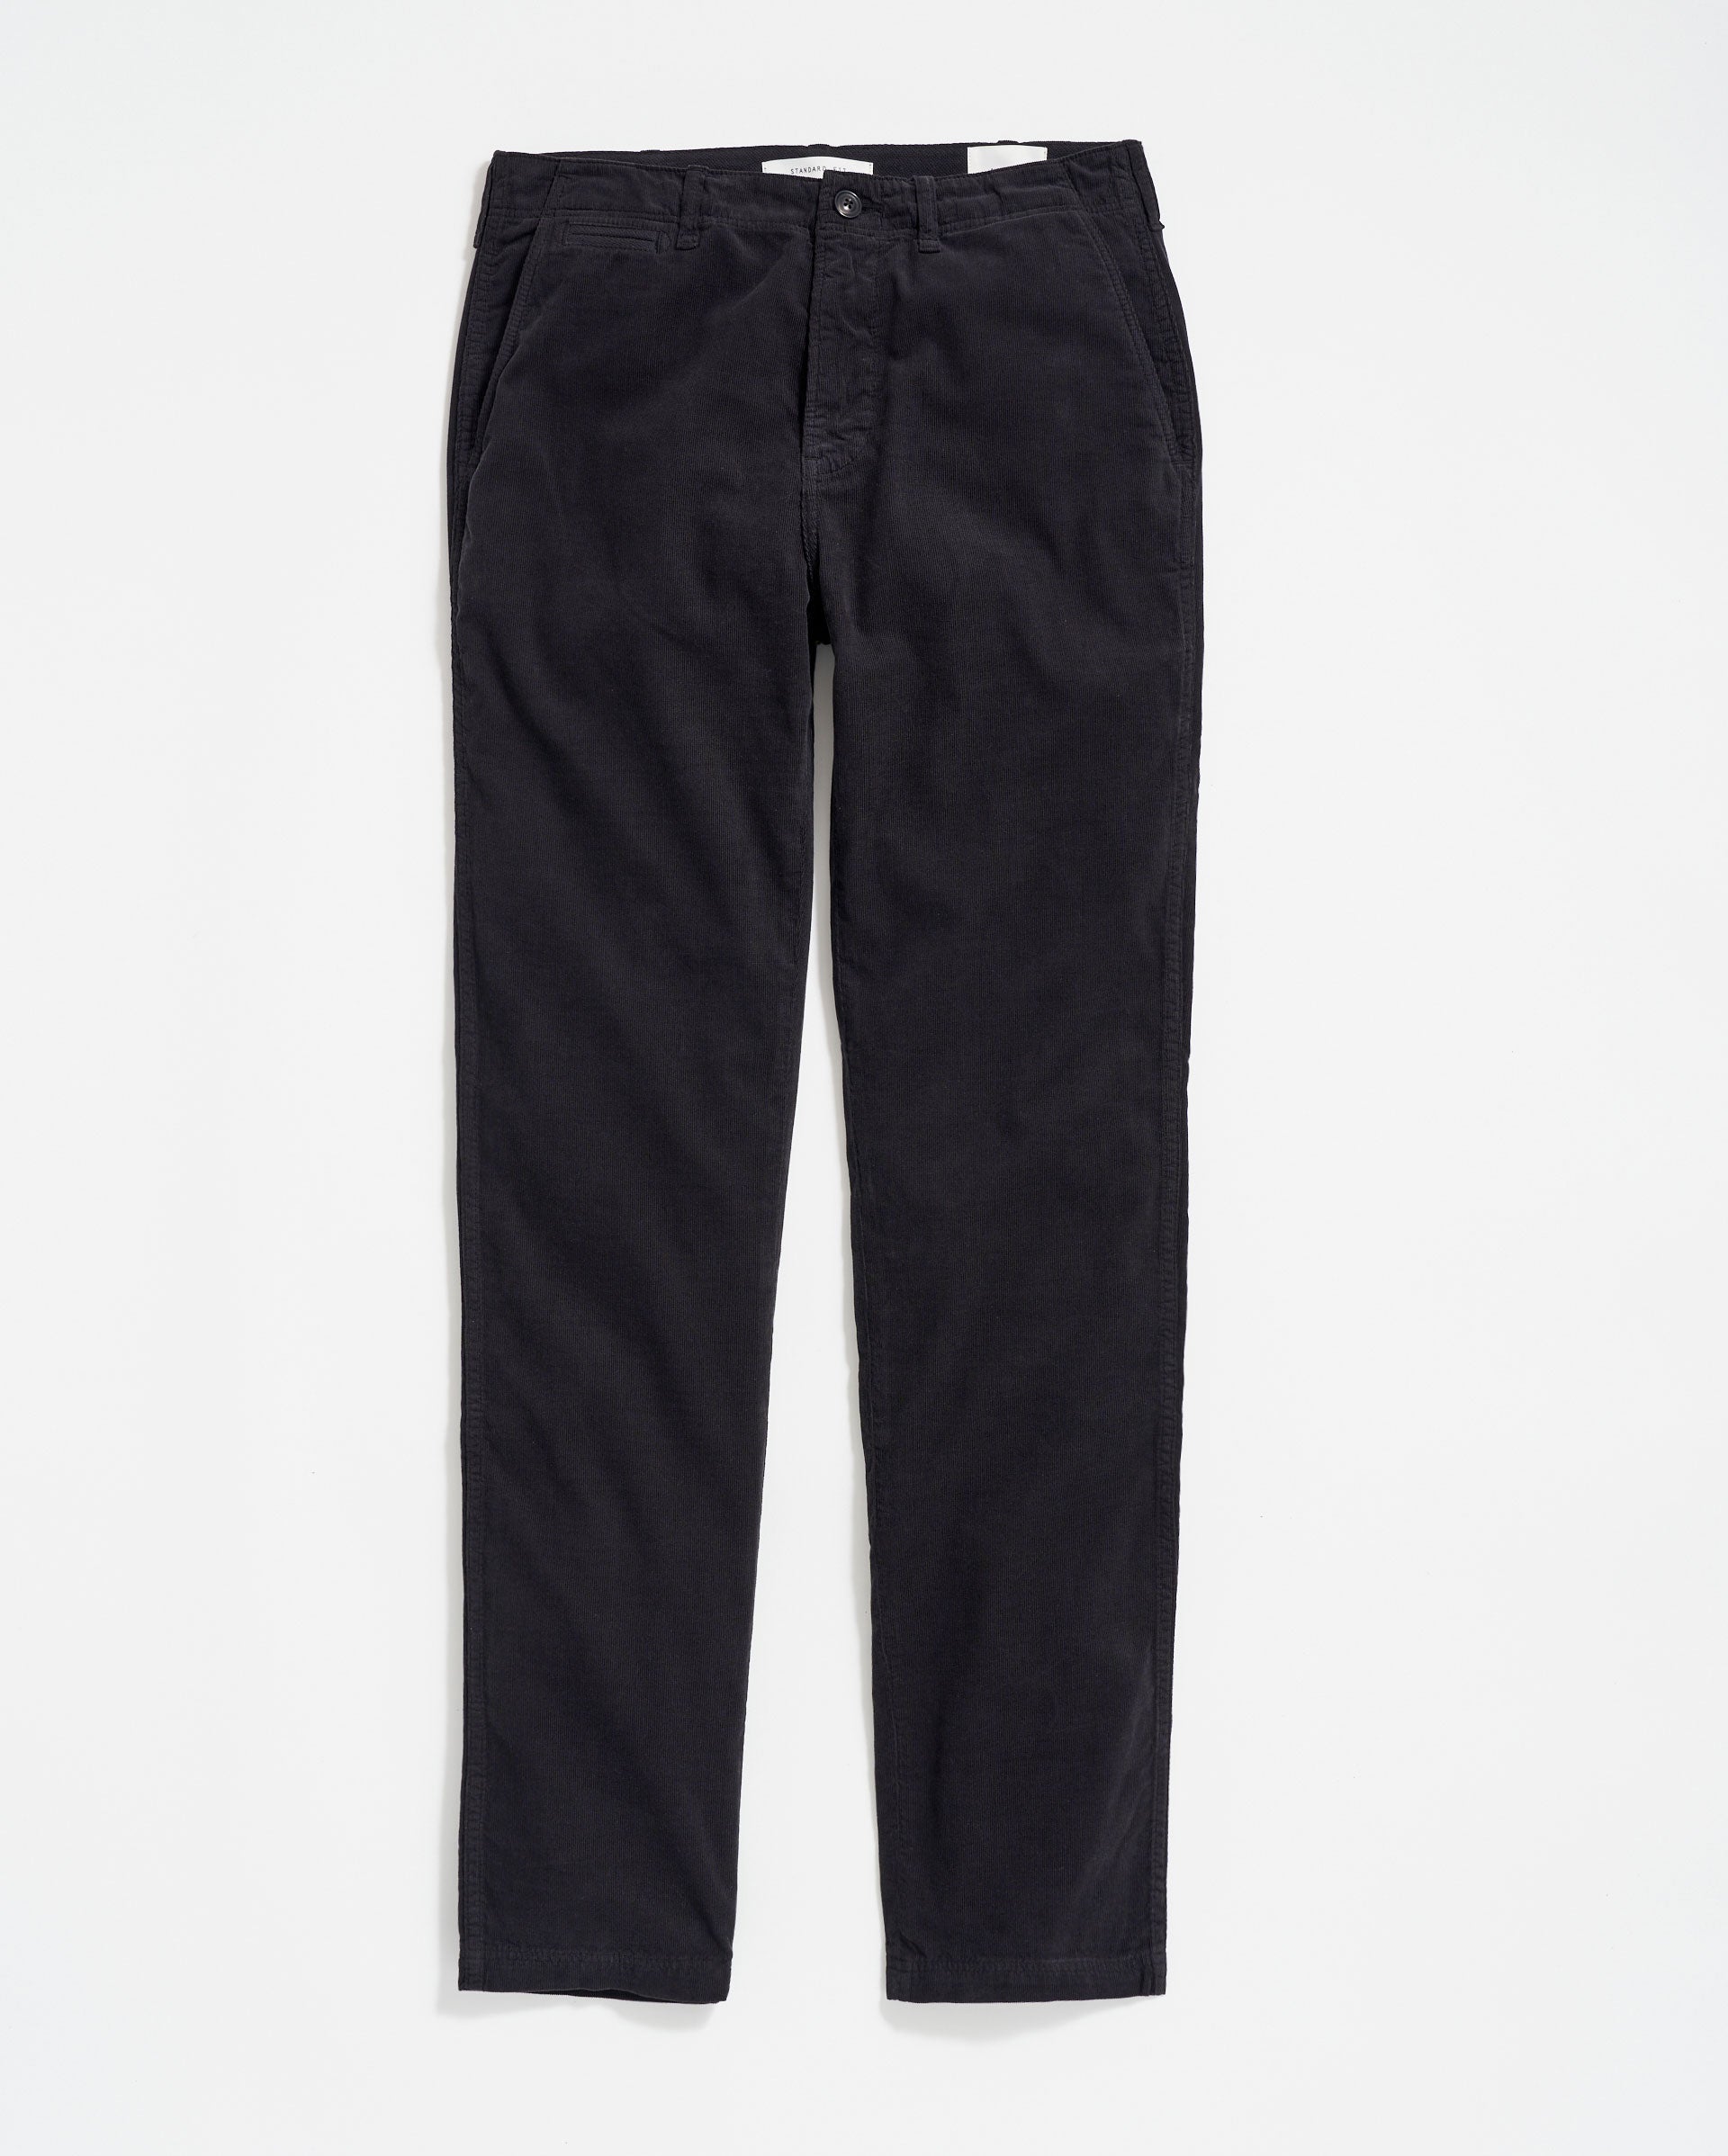 Polo Ralph Lauren Men's Pants - clothing & accessories - by owner - apparel  sale - craigslist